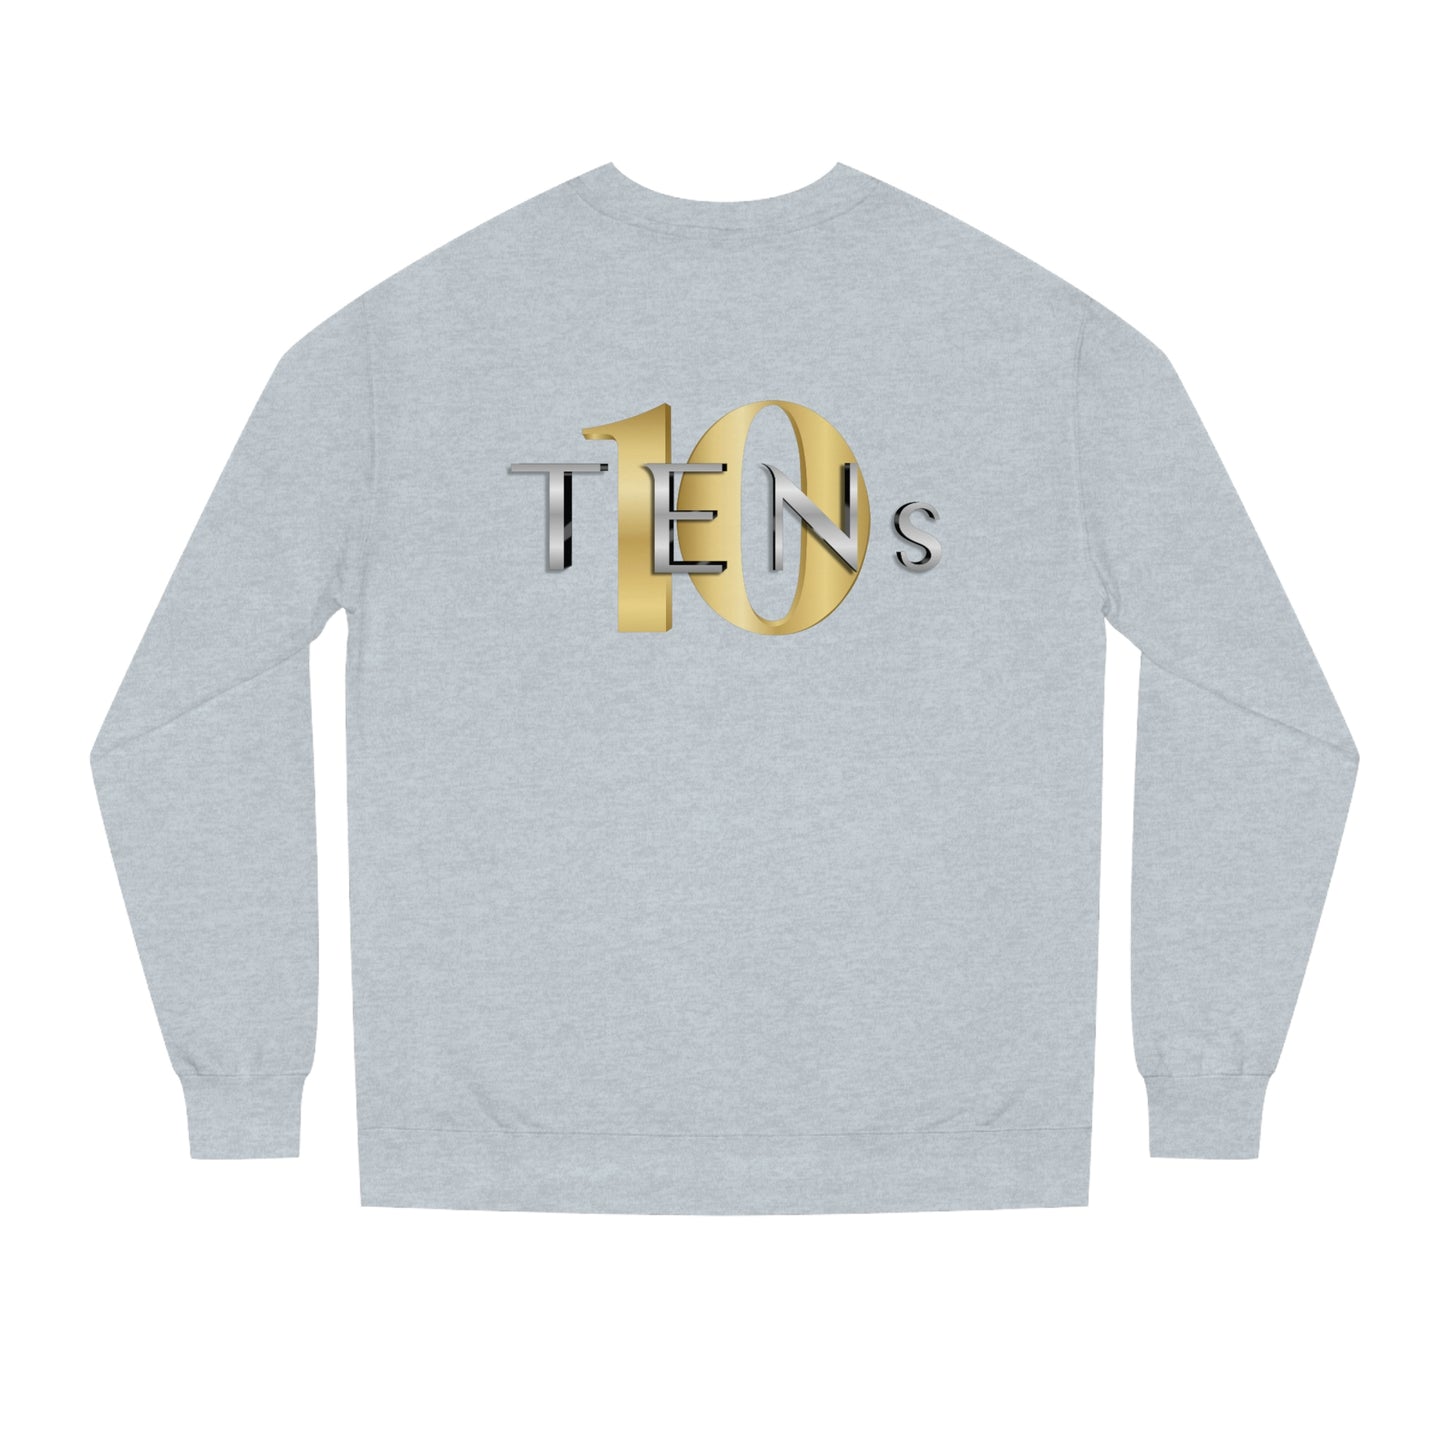 Tens Show Club Unisex Crew Neck Sweatshirt